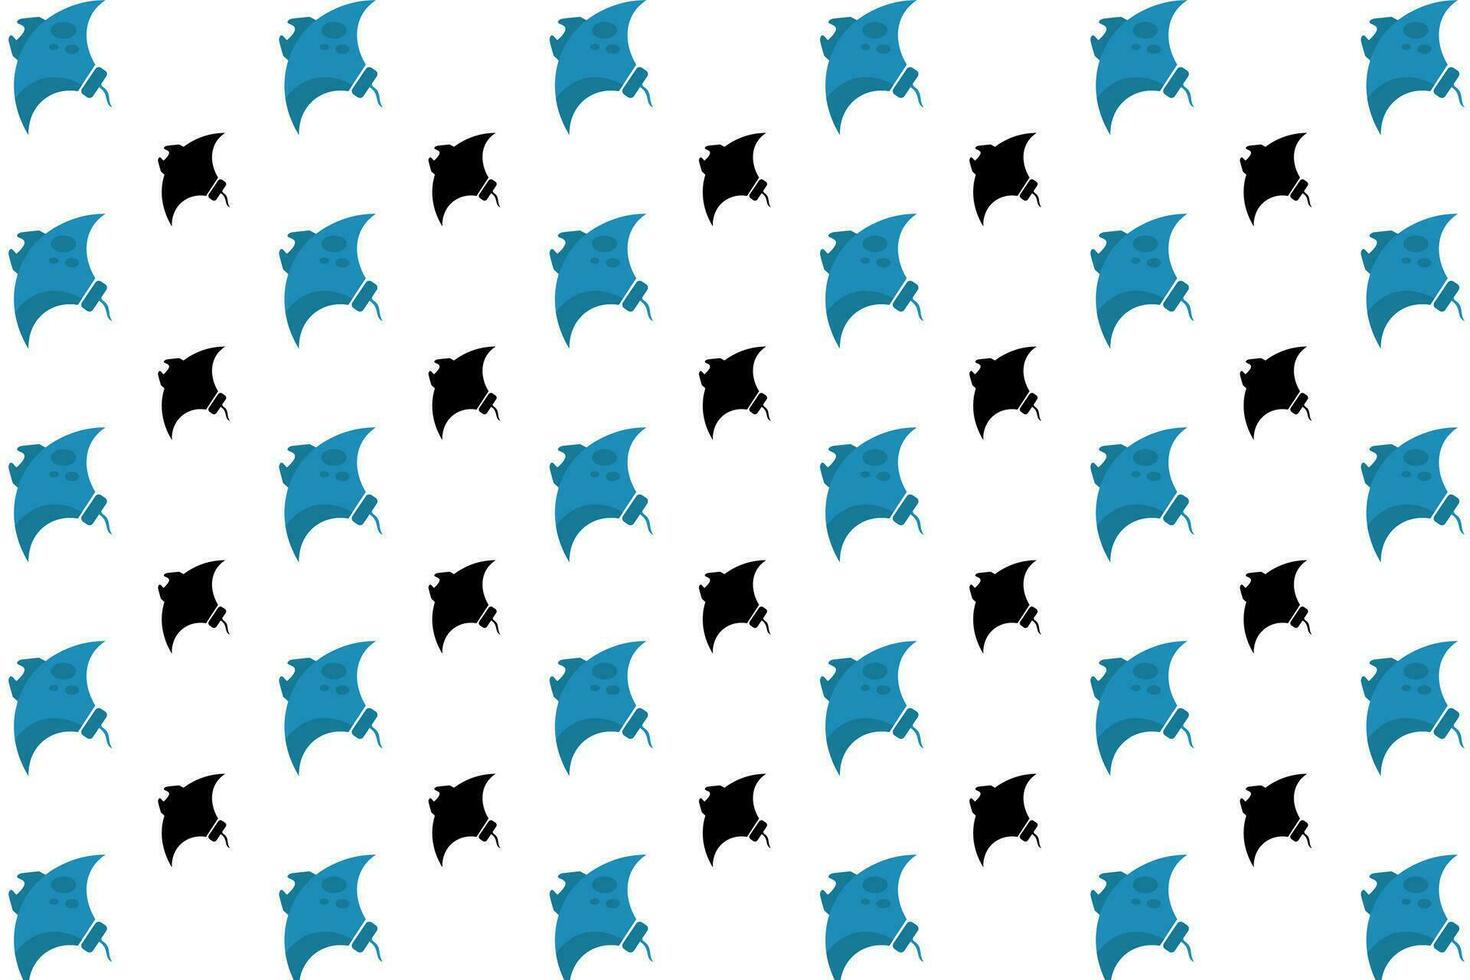 Flat Manta Ray Pattern Background vector